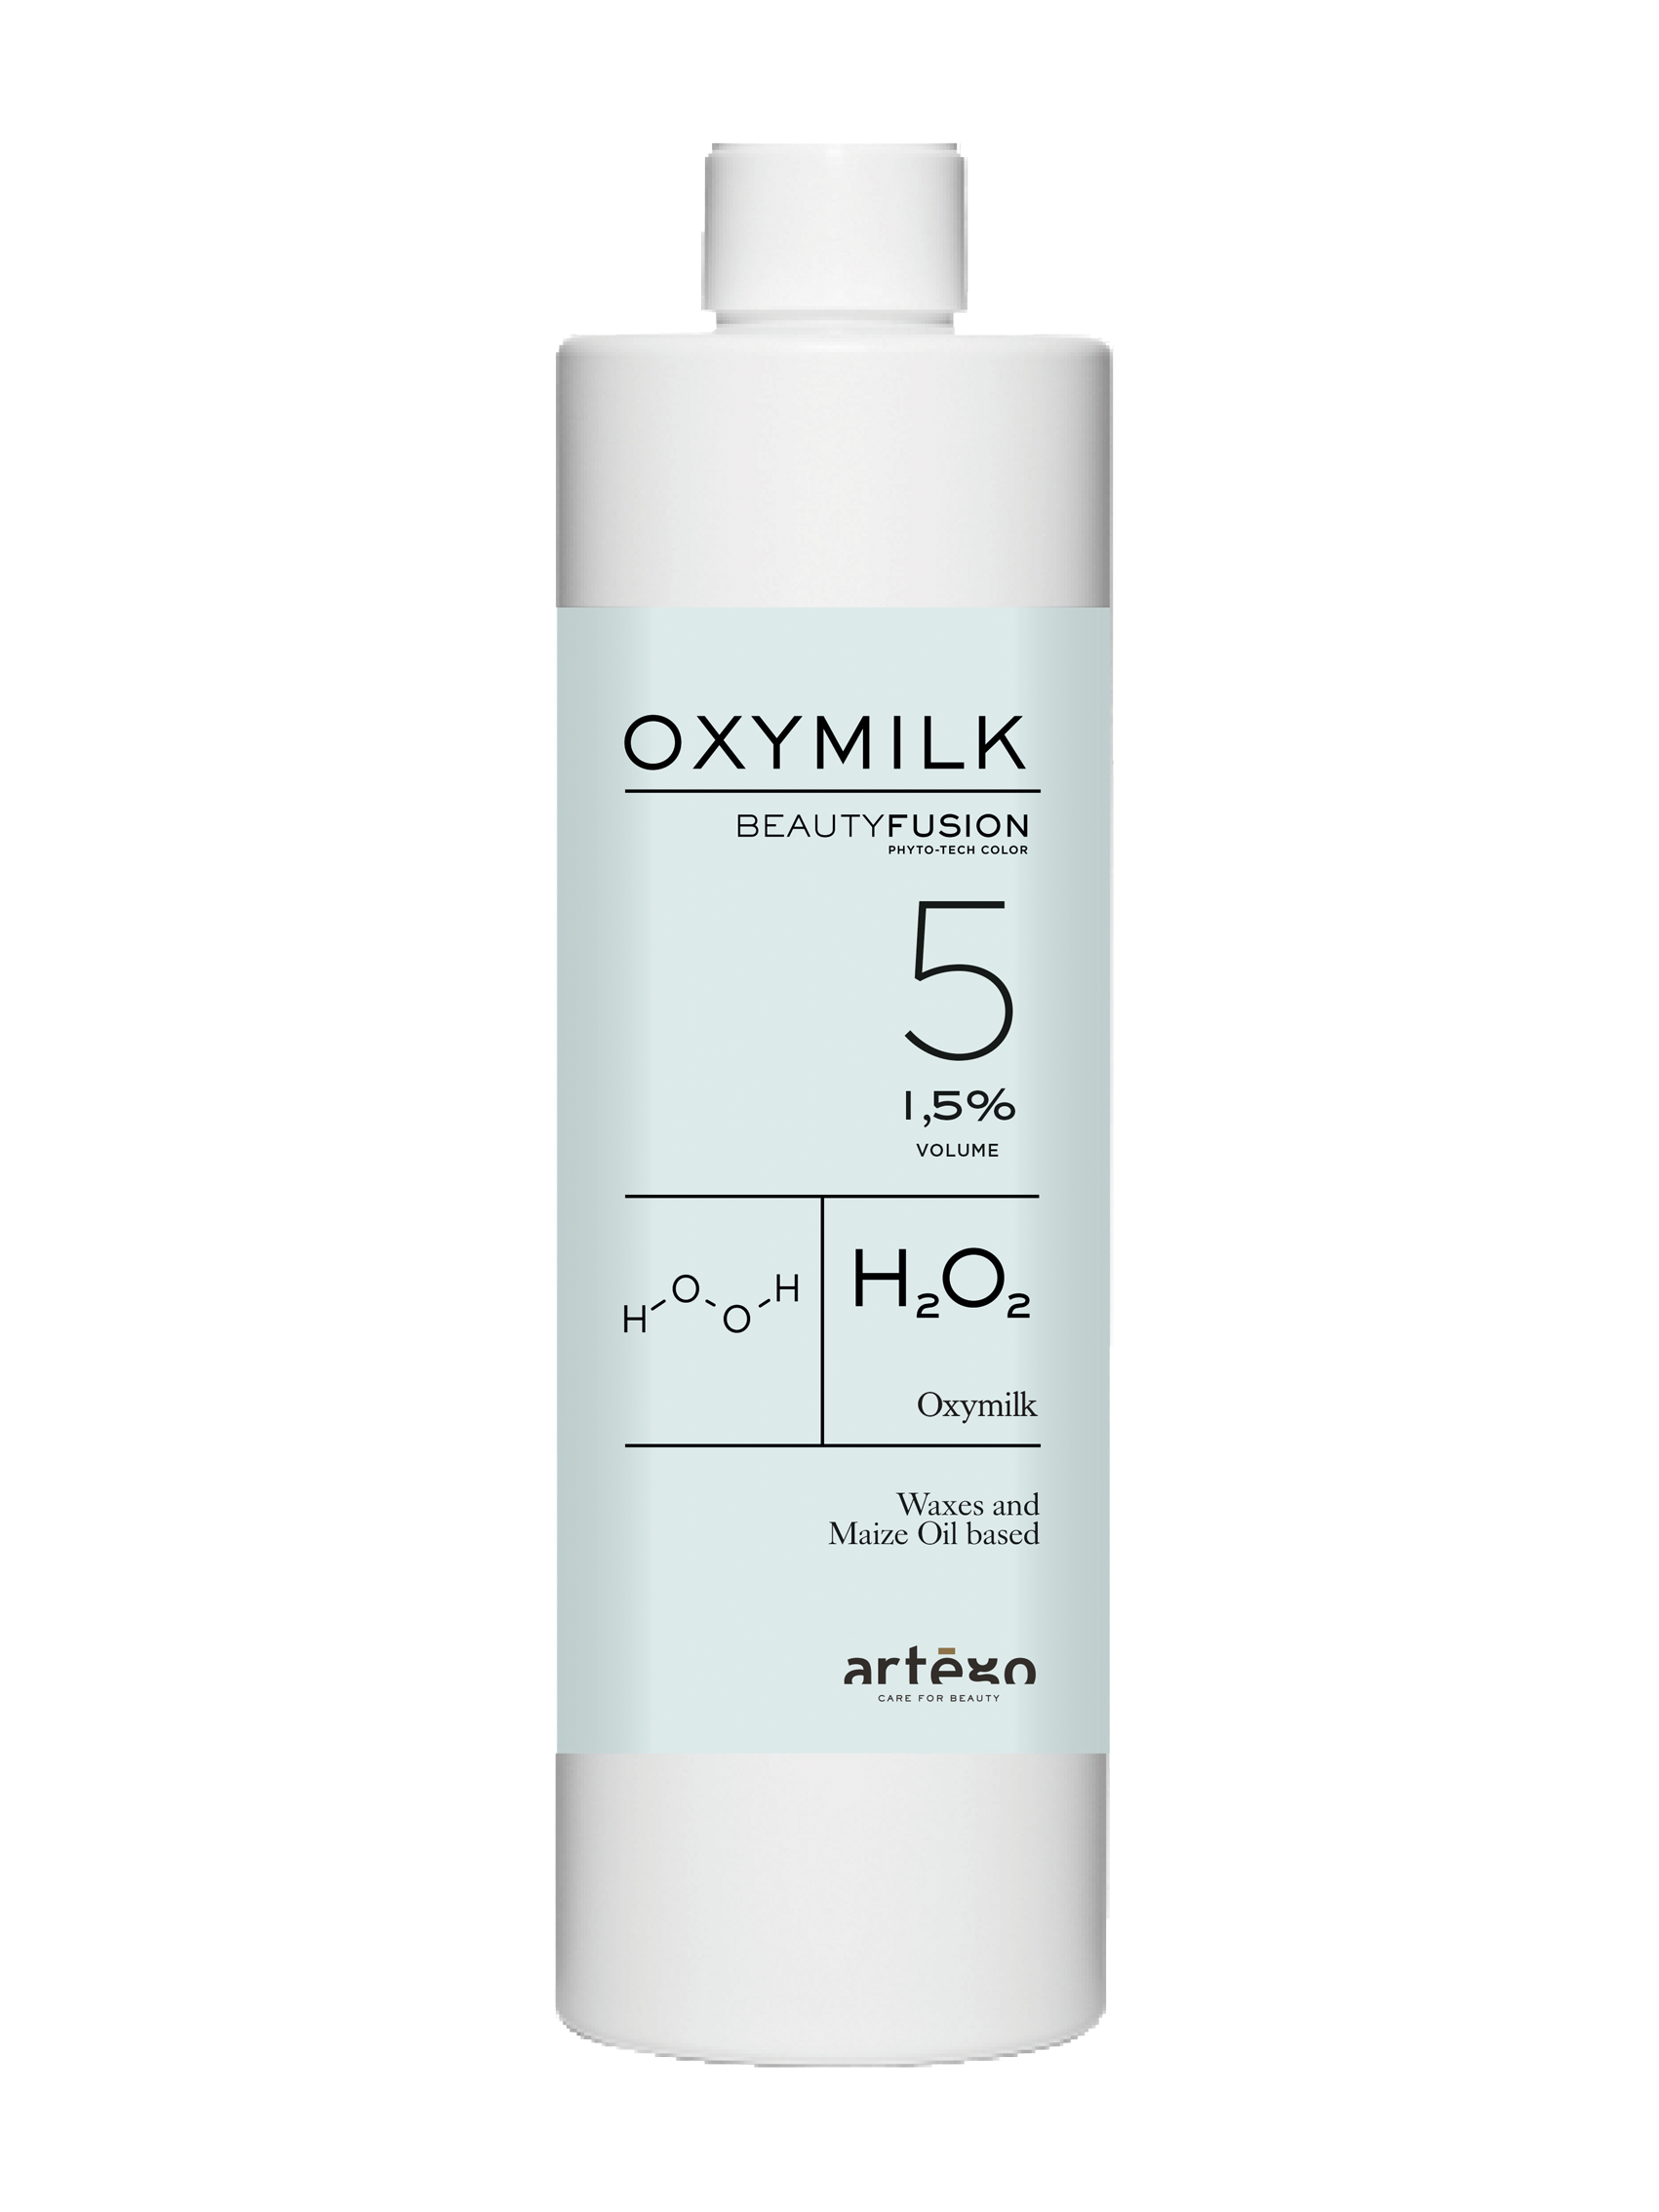 Oxymilk-5-vol-1,5-Beauty-Fusion